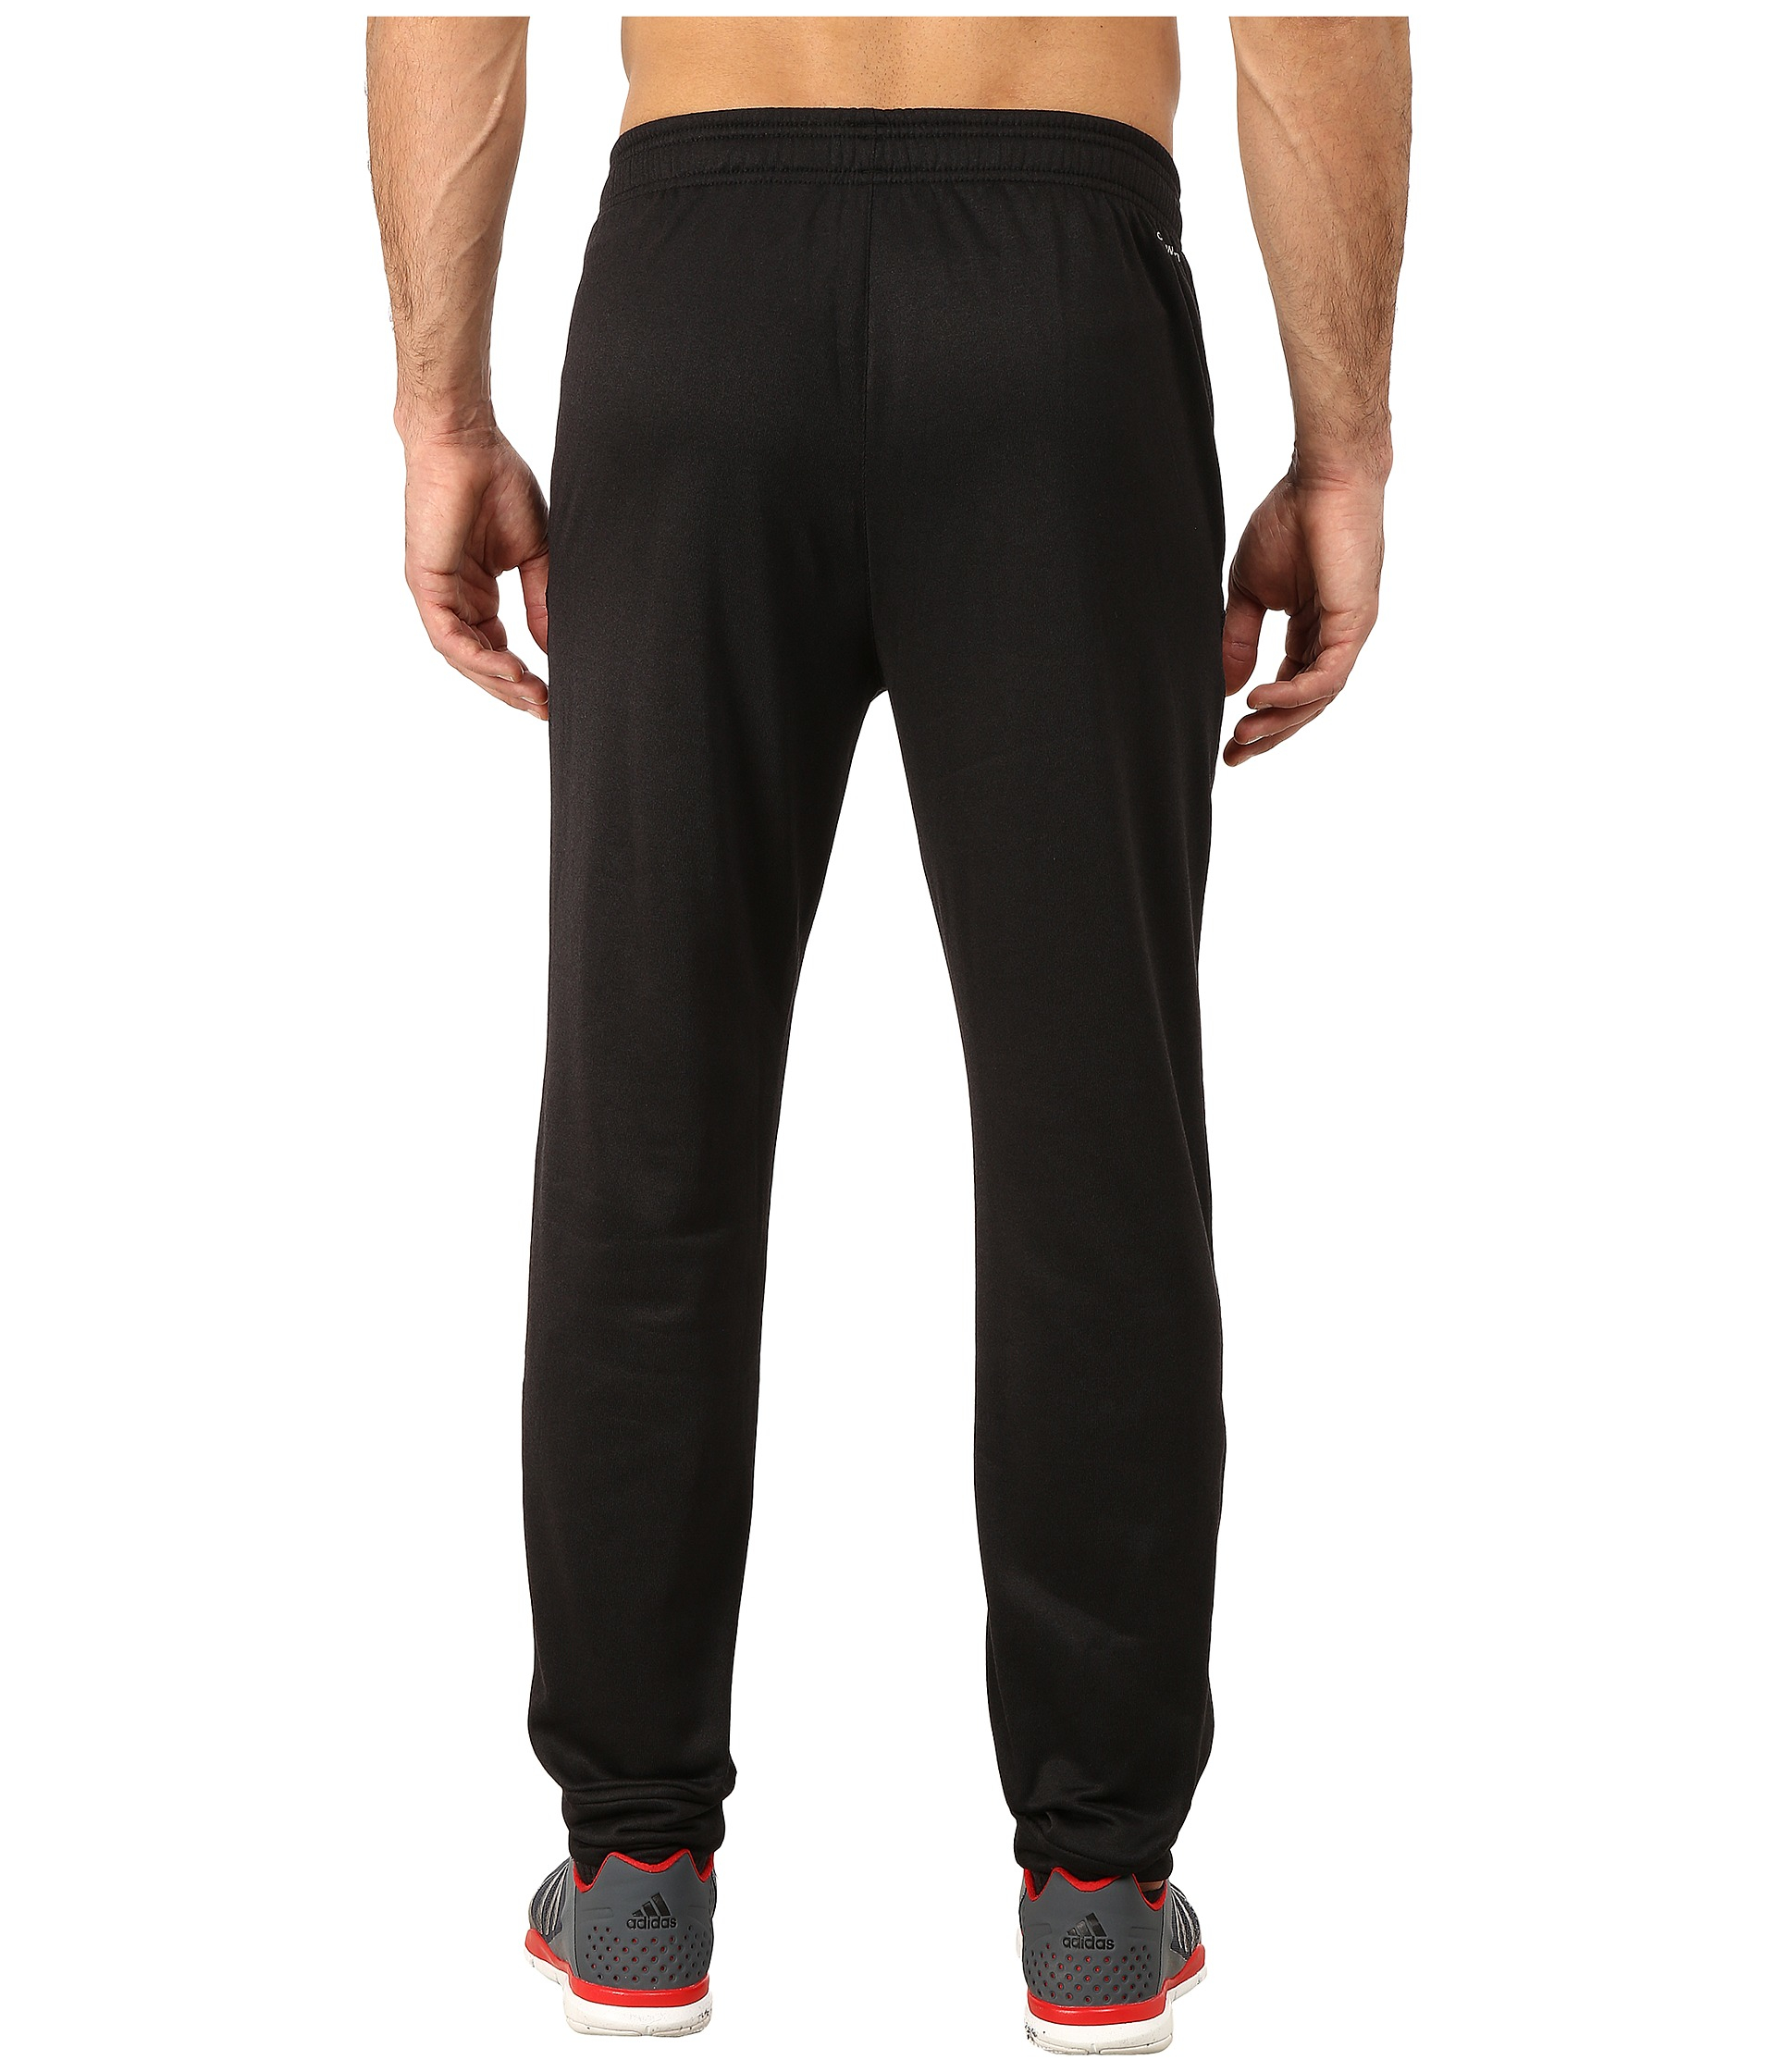 Lyst - Adidas Originals Ultimate Fleece Tapered Pants in Black for Men